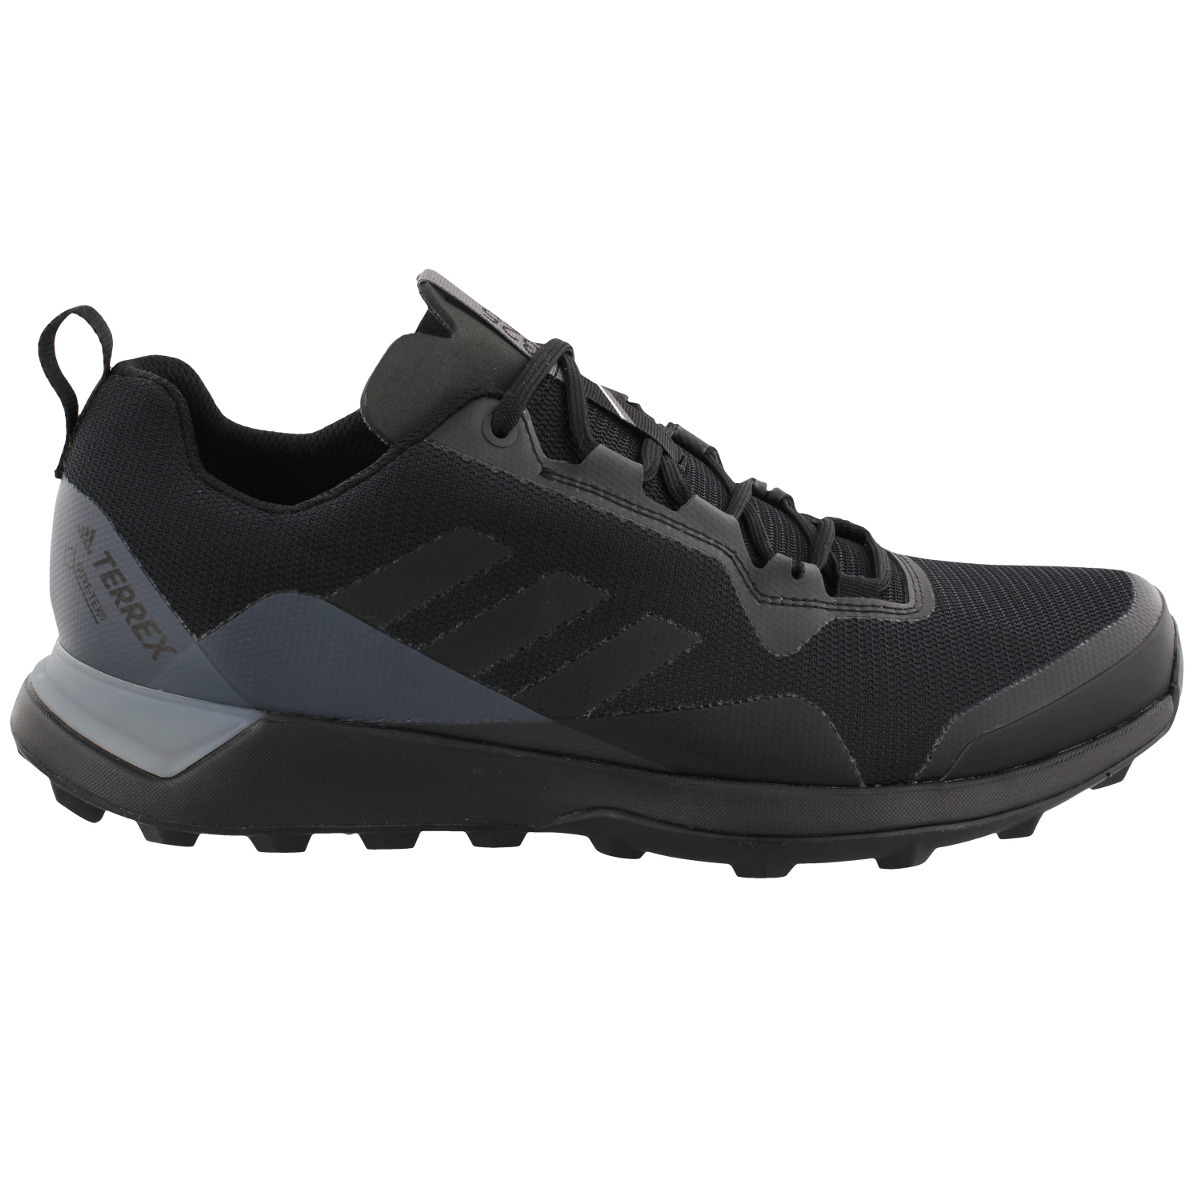 Adidas Men's Terrex Cmtx Gtx Hiking/trail Running Shoes, Black